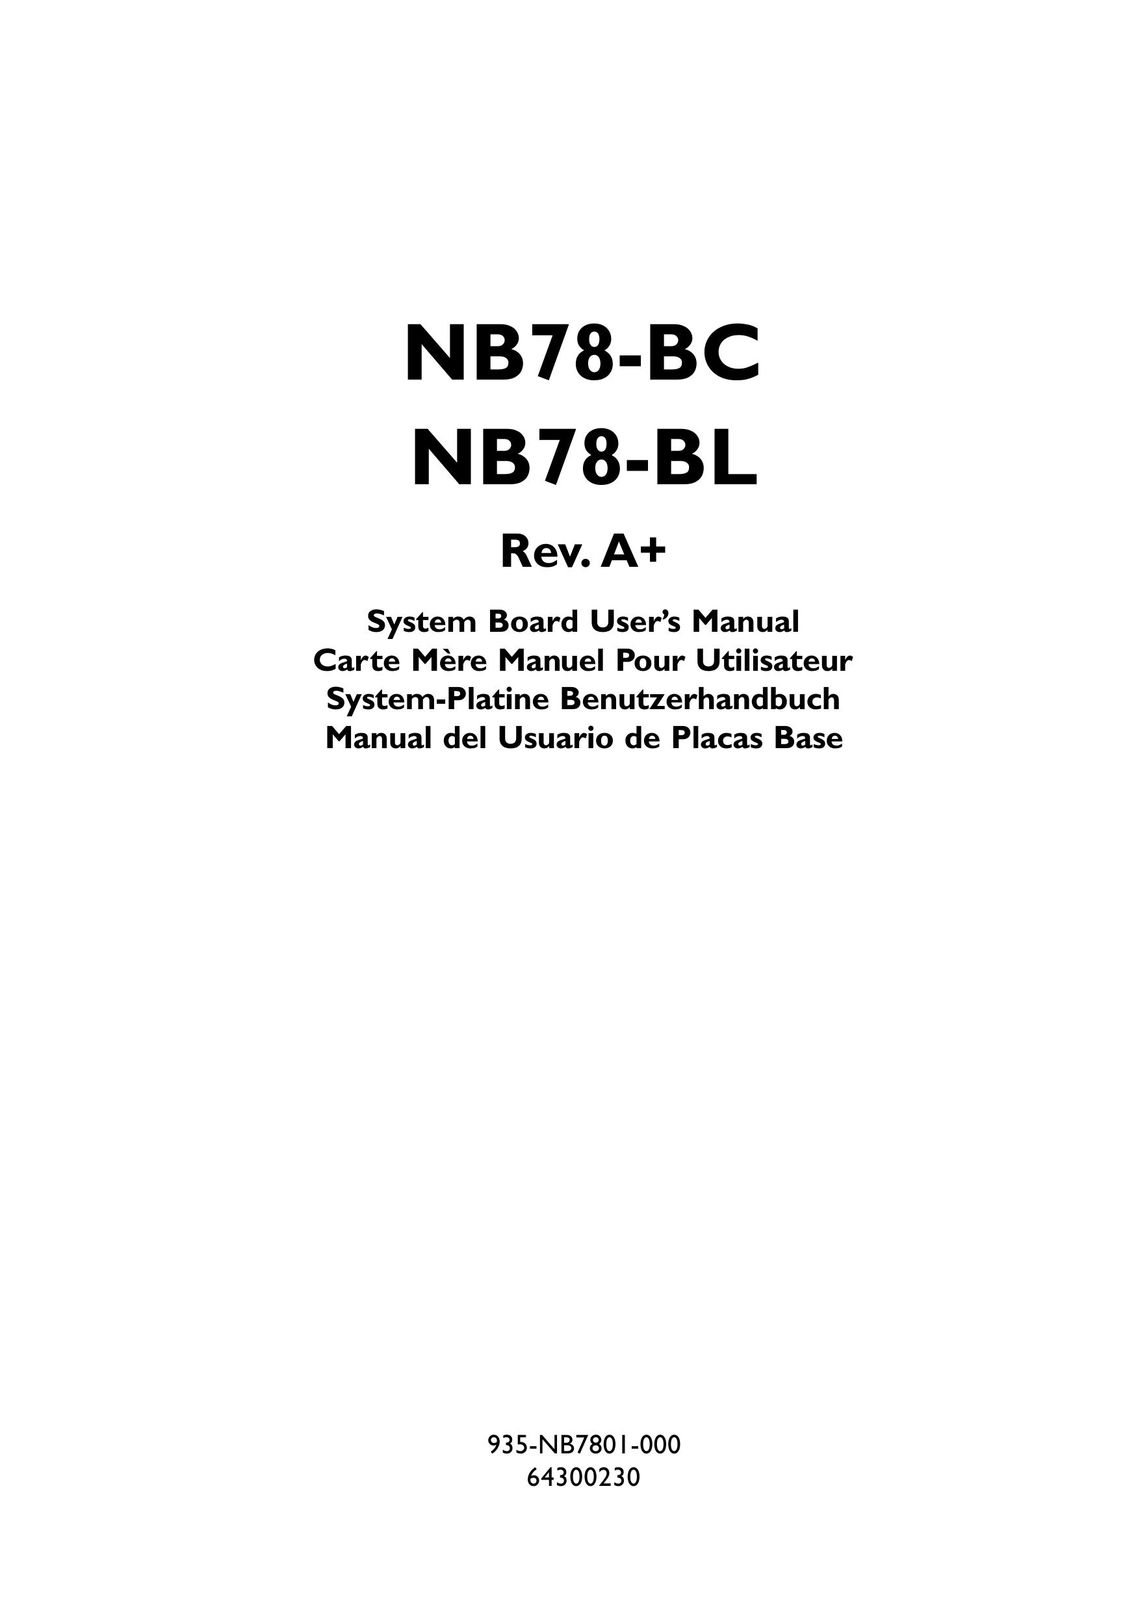 DFI NB78-BC Computer Hardware User Manual